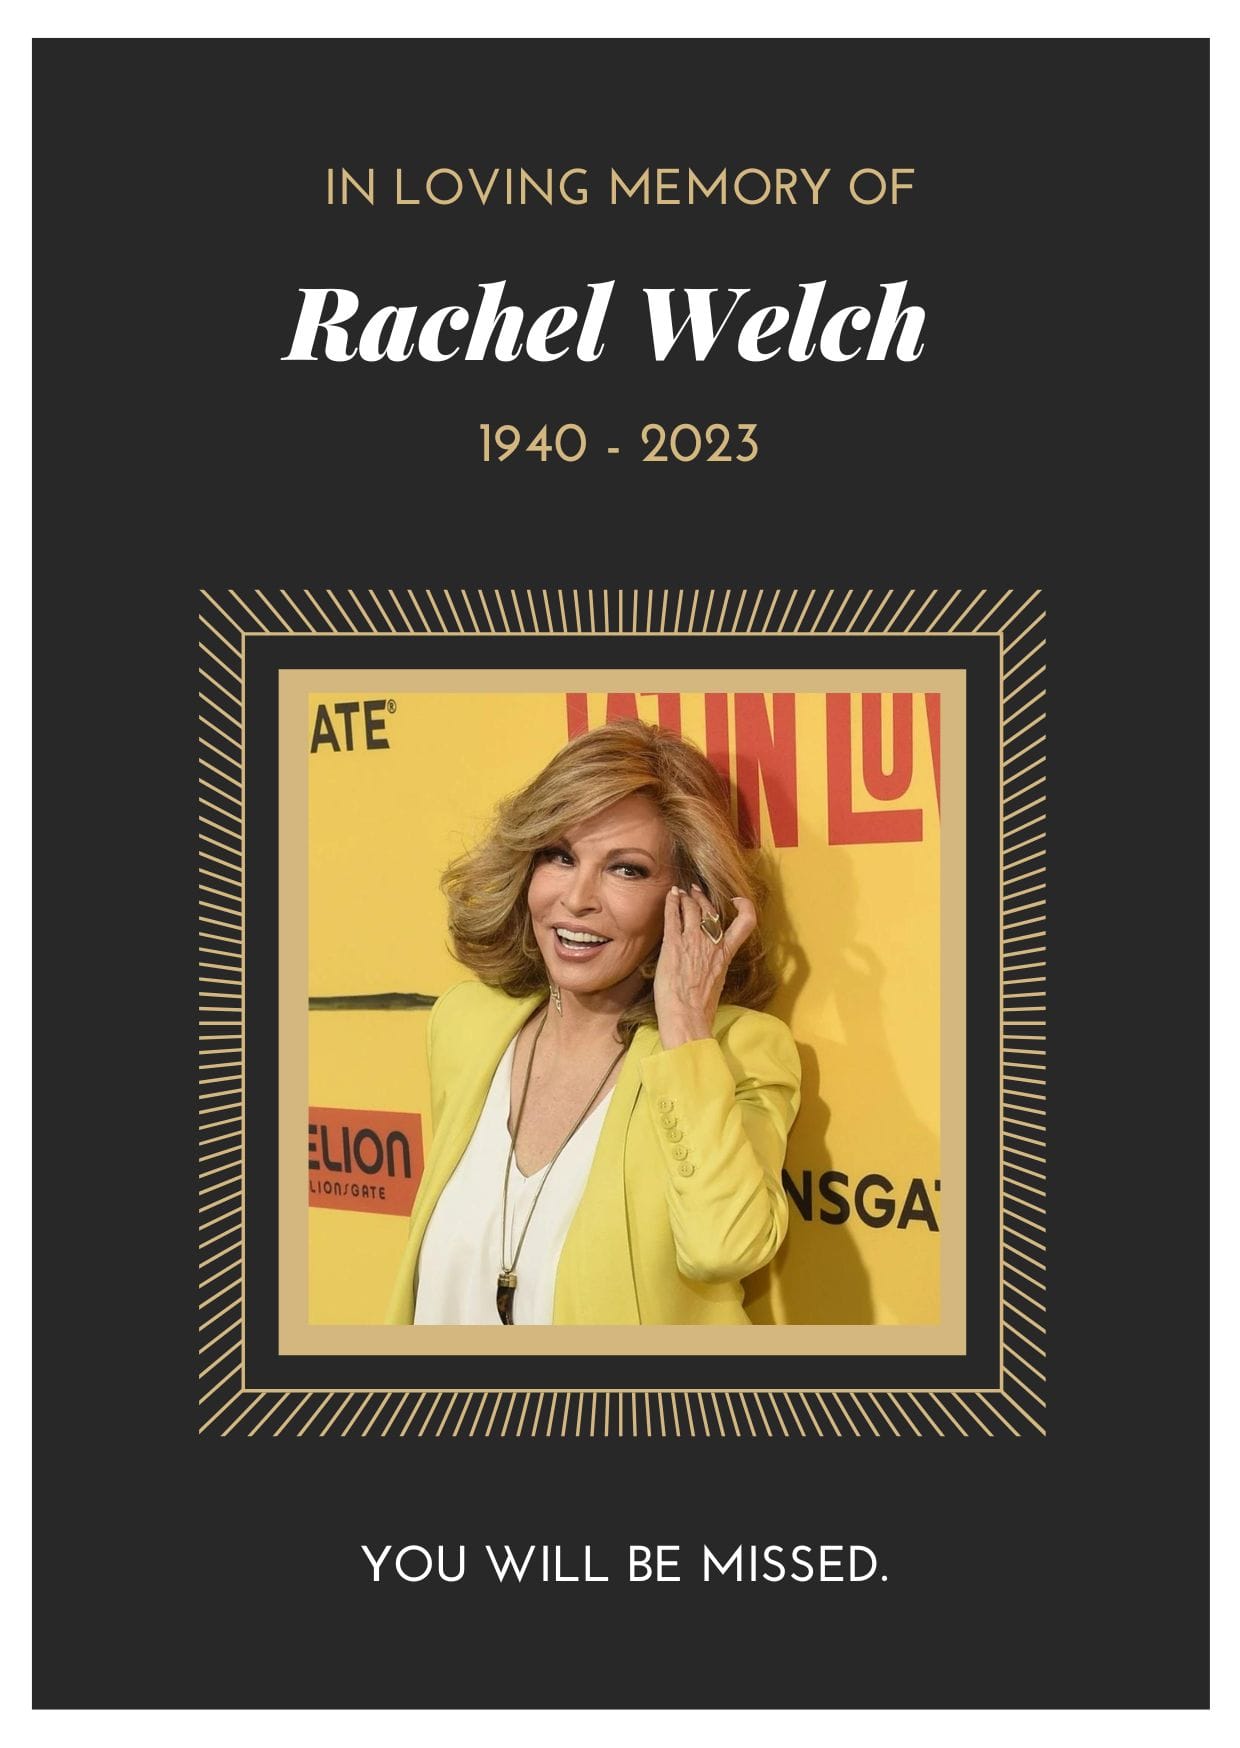 Rachel Welch Death